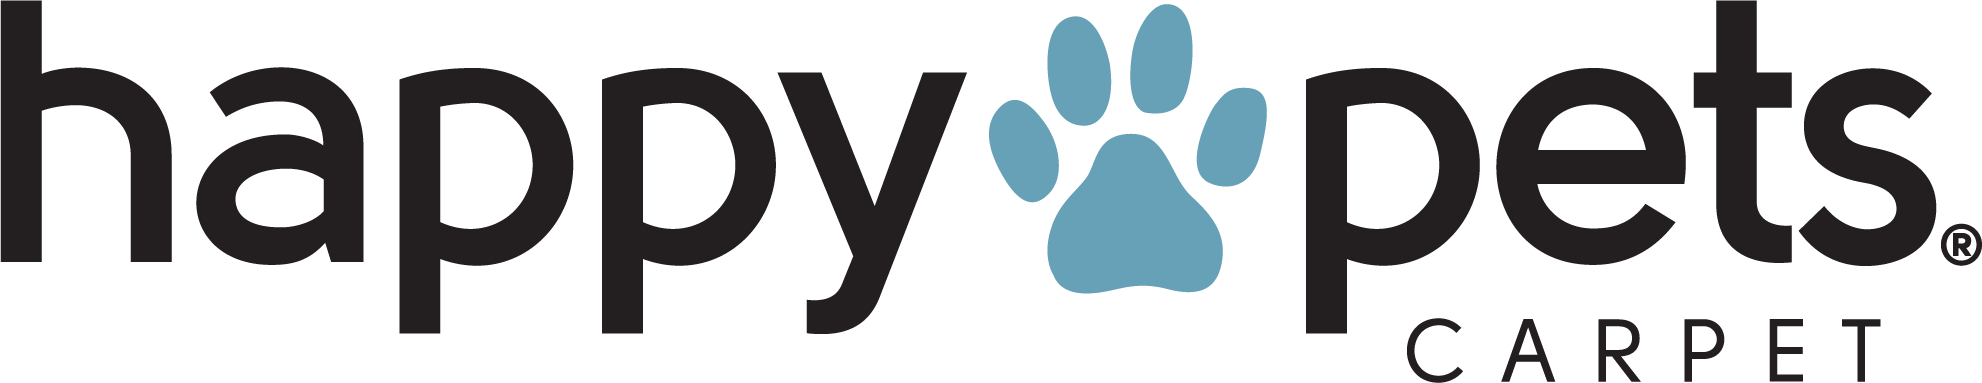 Pet Performance Happy Pets Logo | Carpetland USA Granite & Flooring